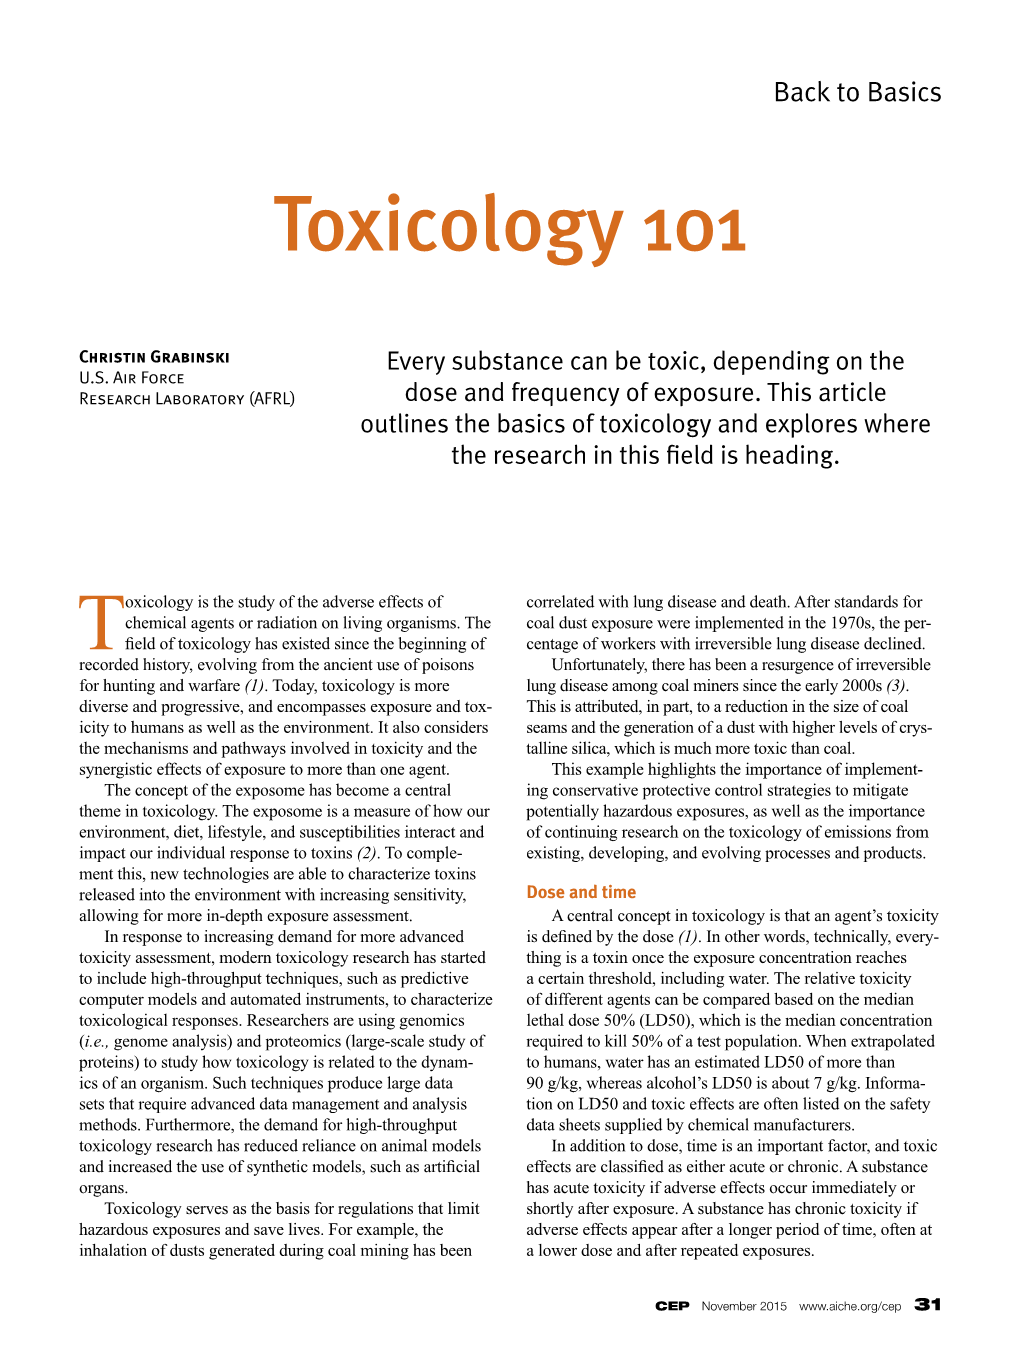 Toxicology 101